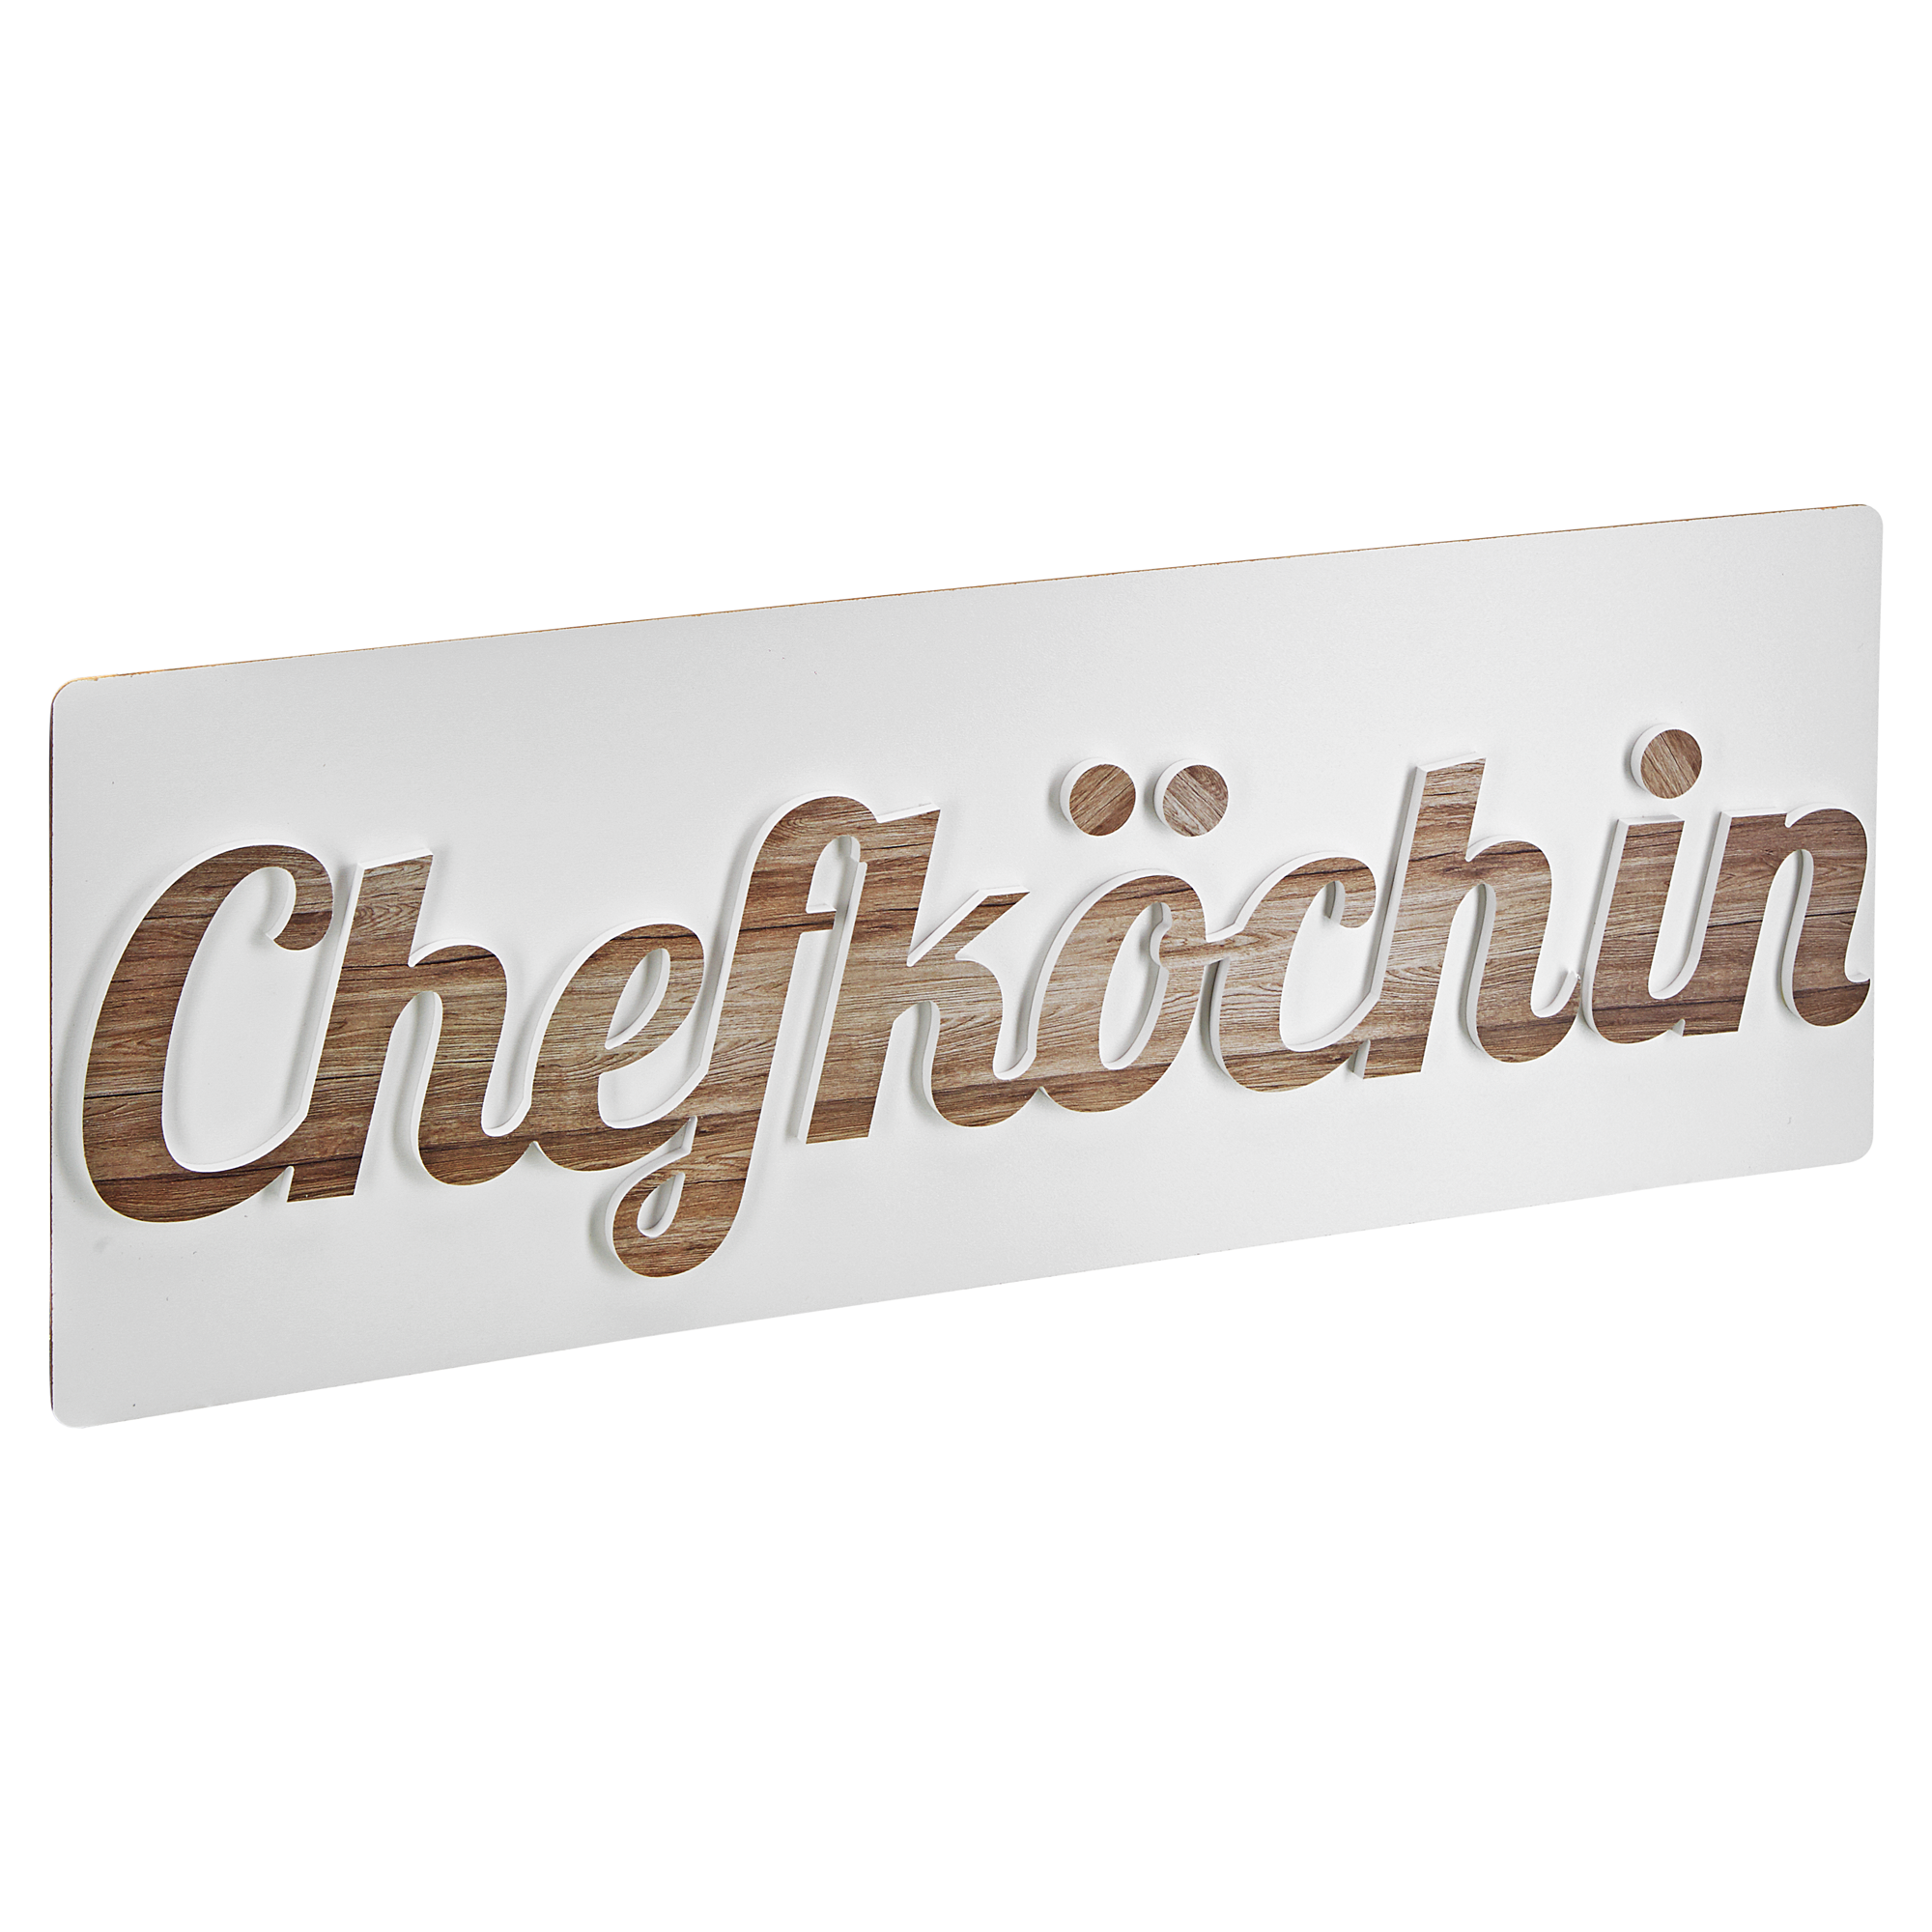 Decopanel "Chefköchin" Cut-Out 70 x 25 cm + product picture